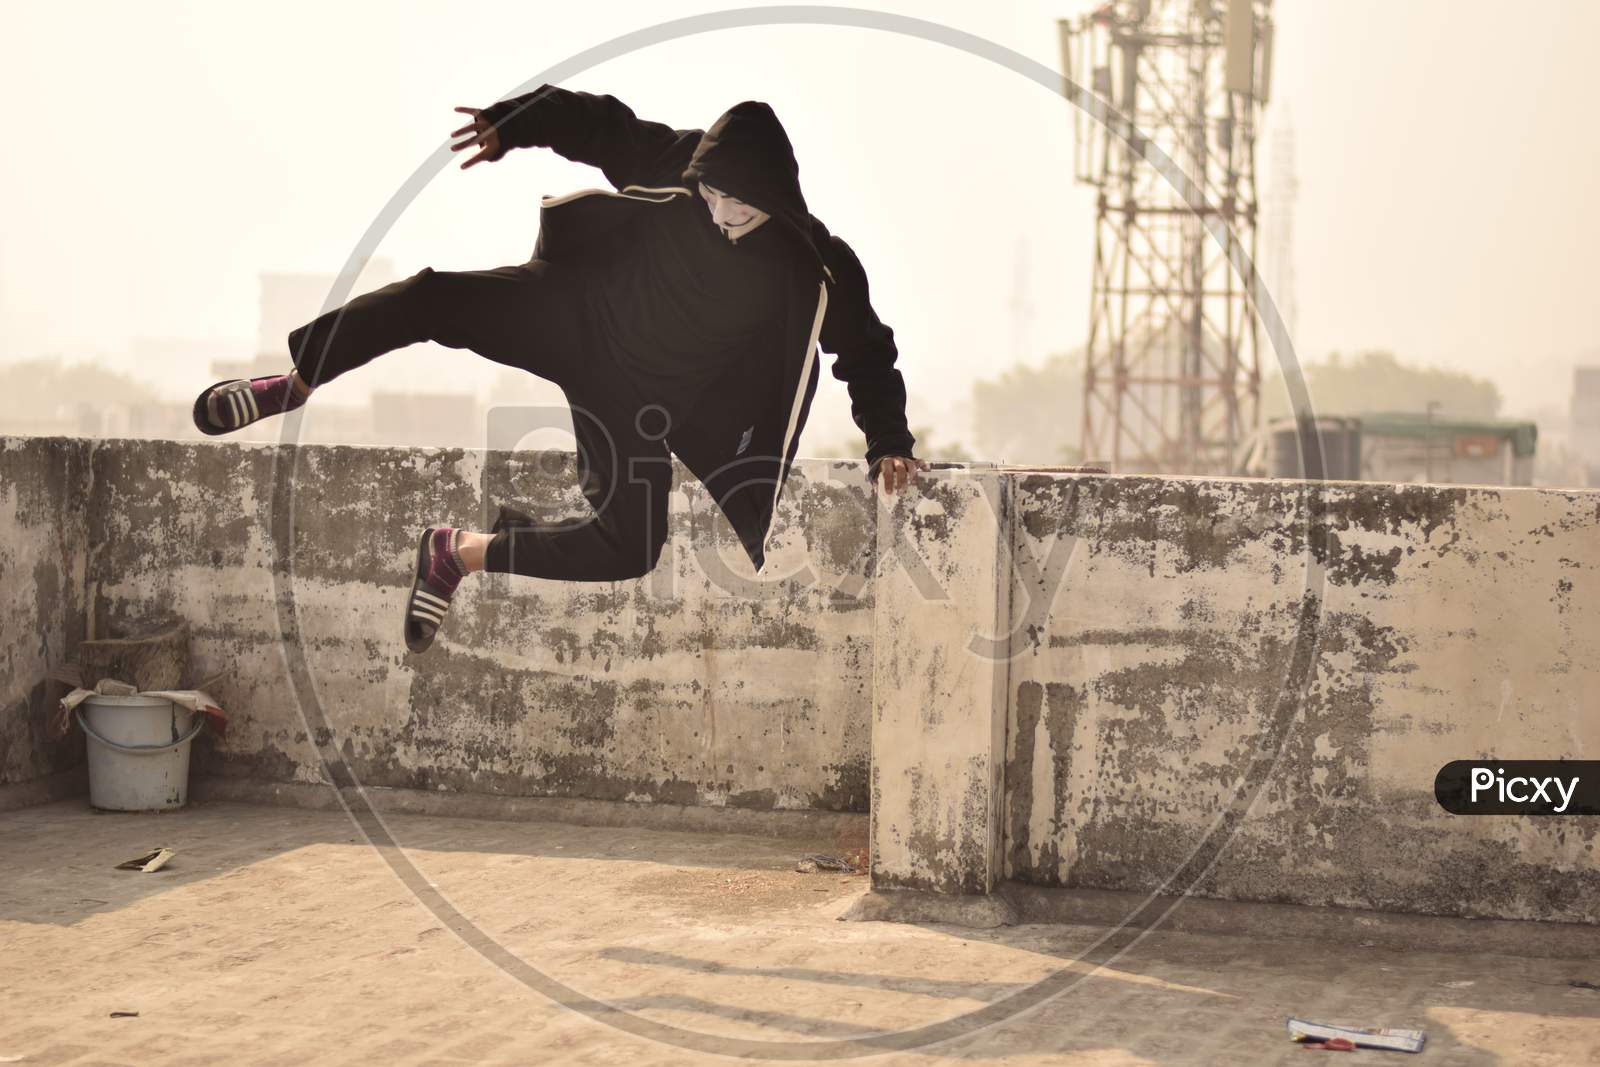 Indian Model doing a free air kick